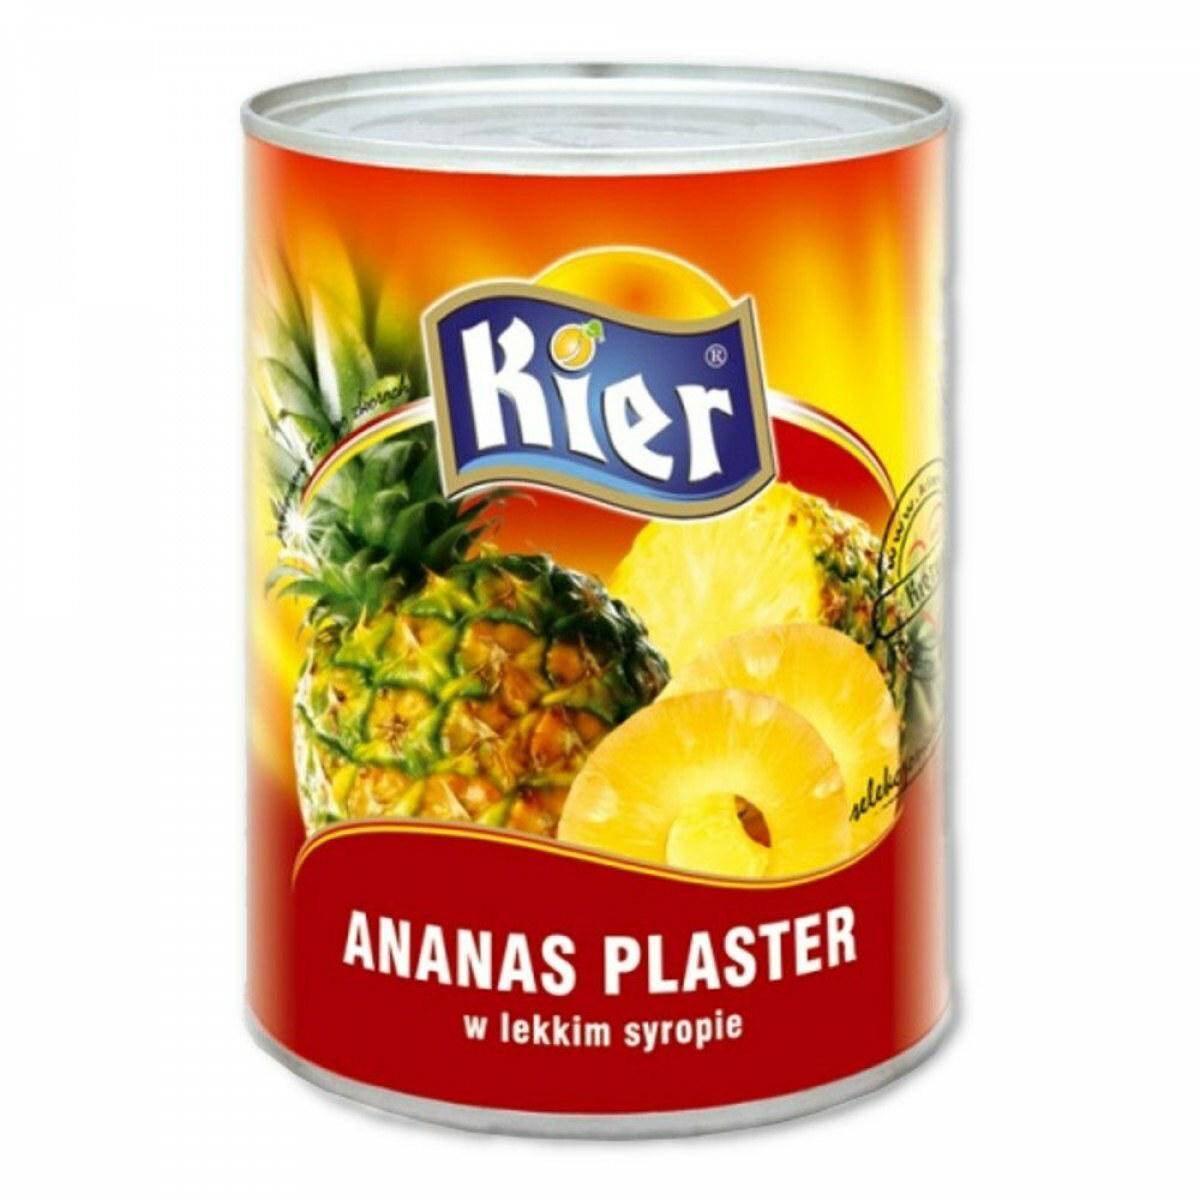 KIER Ananas plastry 565g*24.